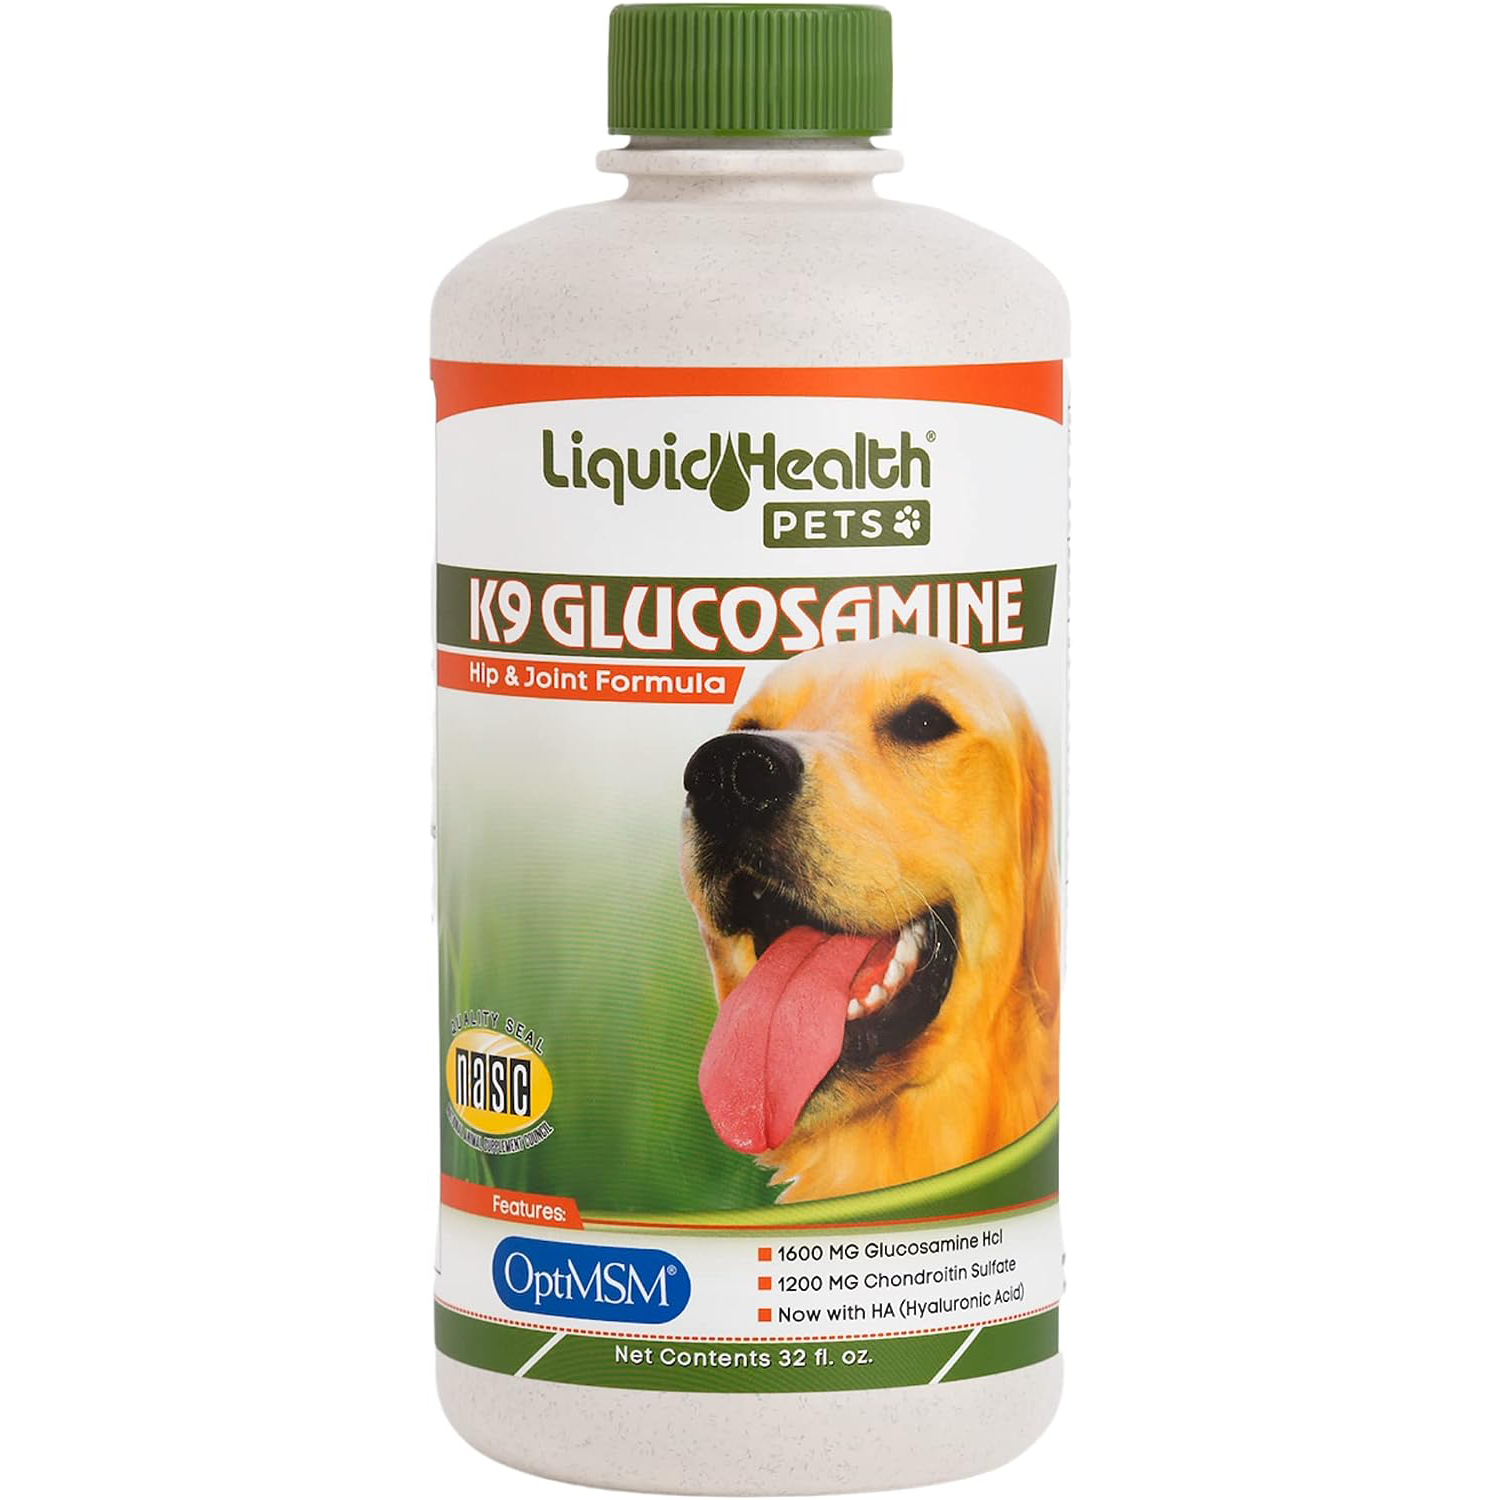 Liquid Health Pets Original K9 Glucosamine Dog Supplement